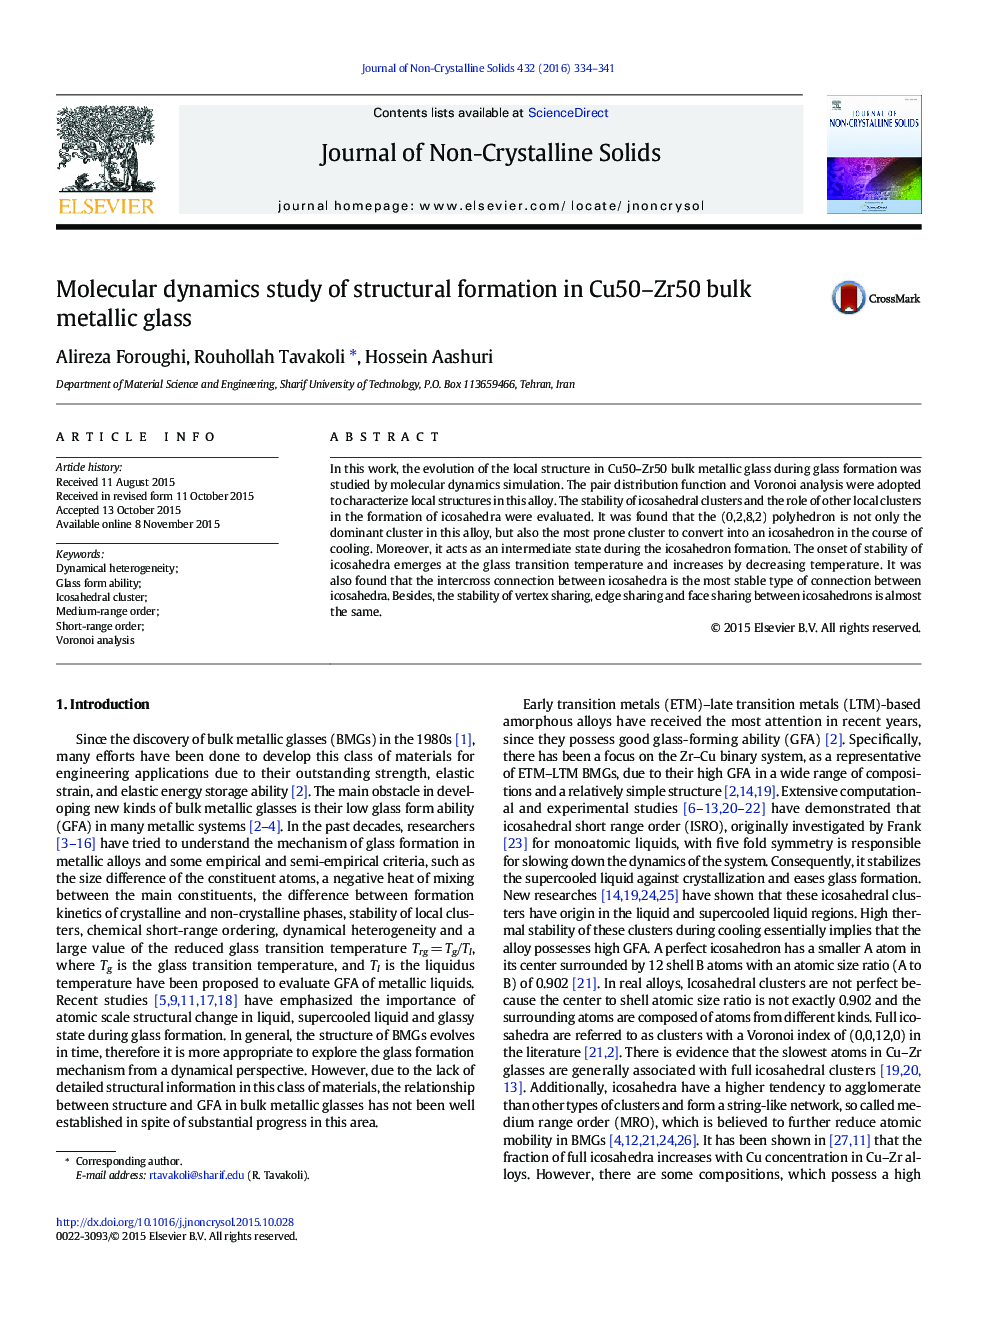 Molecular dynamics study of structural formation in Cu50–Zr50 bulk metallic glass